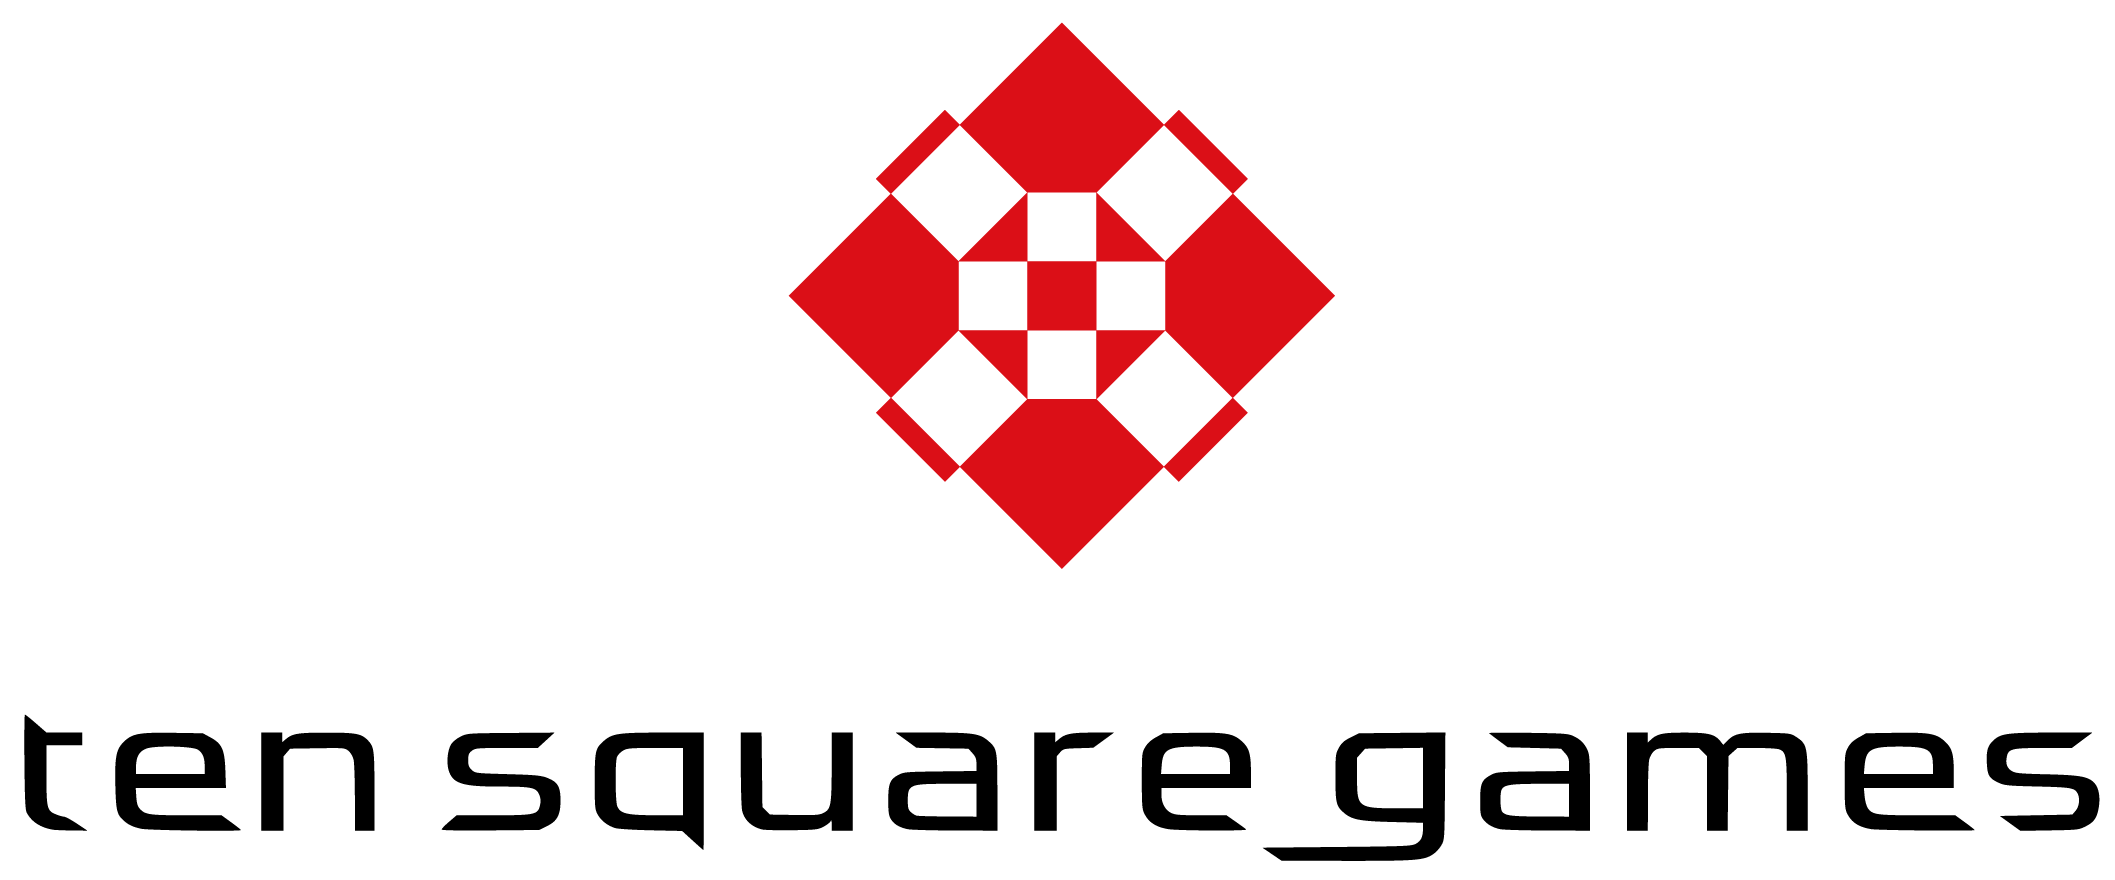 Ten Square Games logo